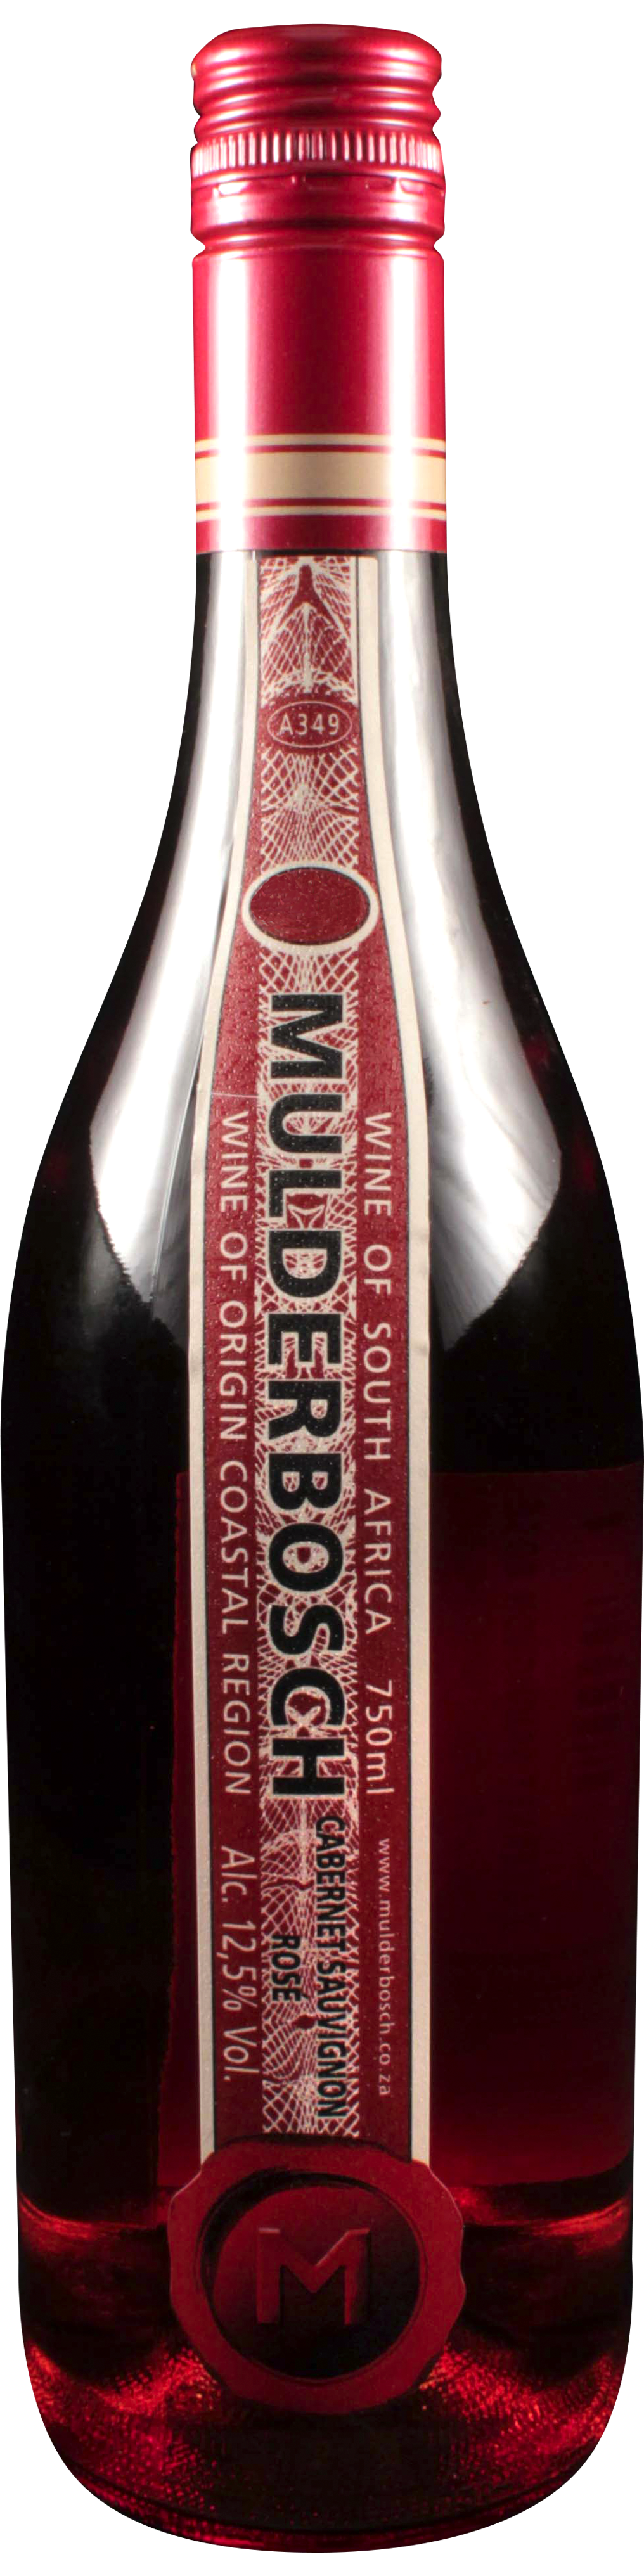 Bottle shot of 2014 Cabernet Sauvignon Rose